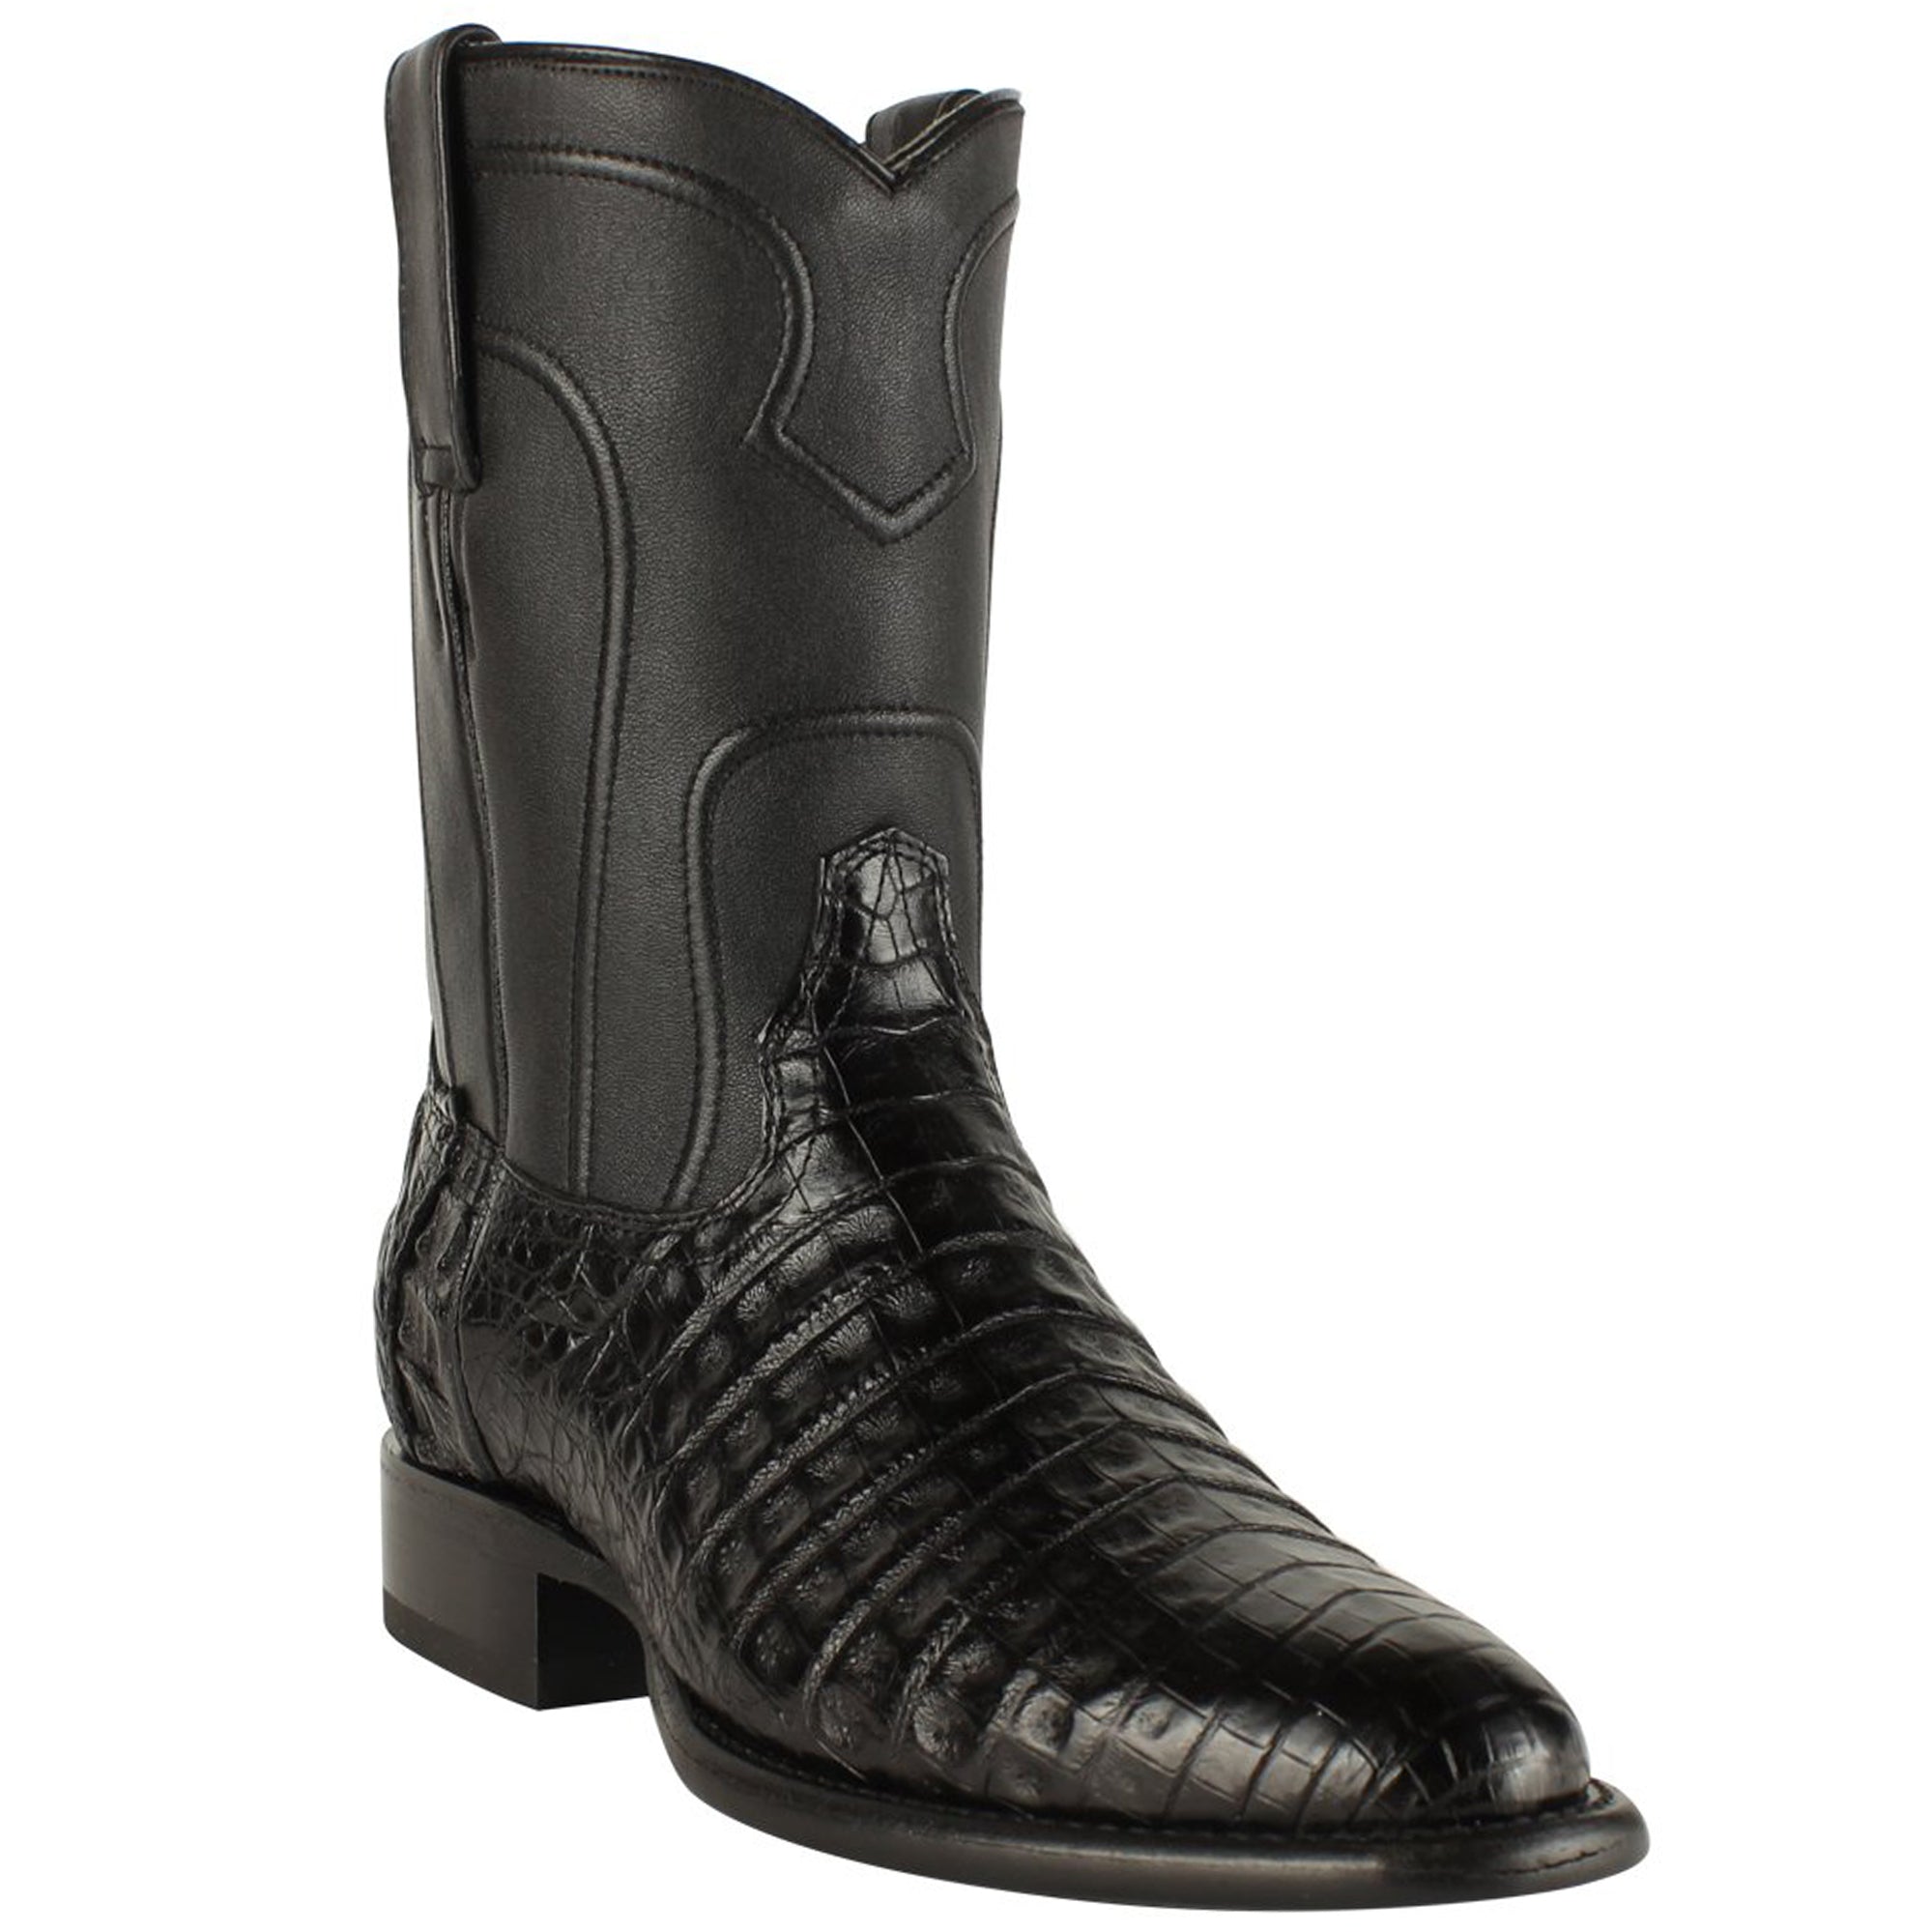 Black Caiman Roper Boots